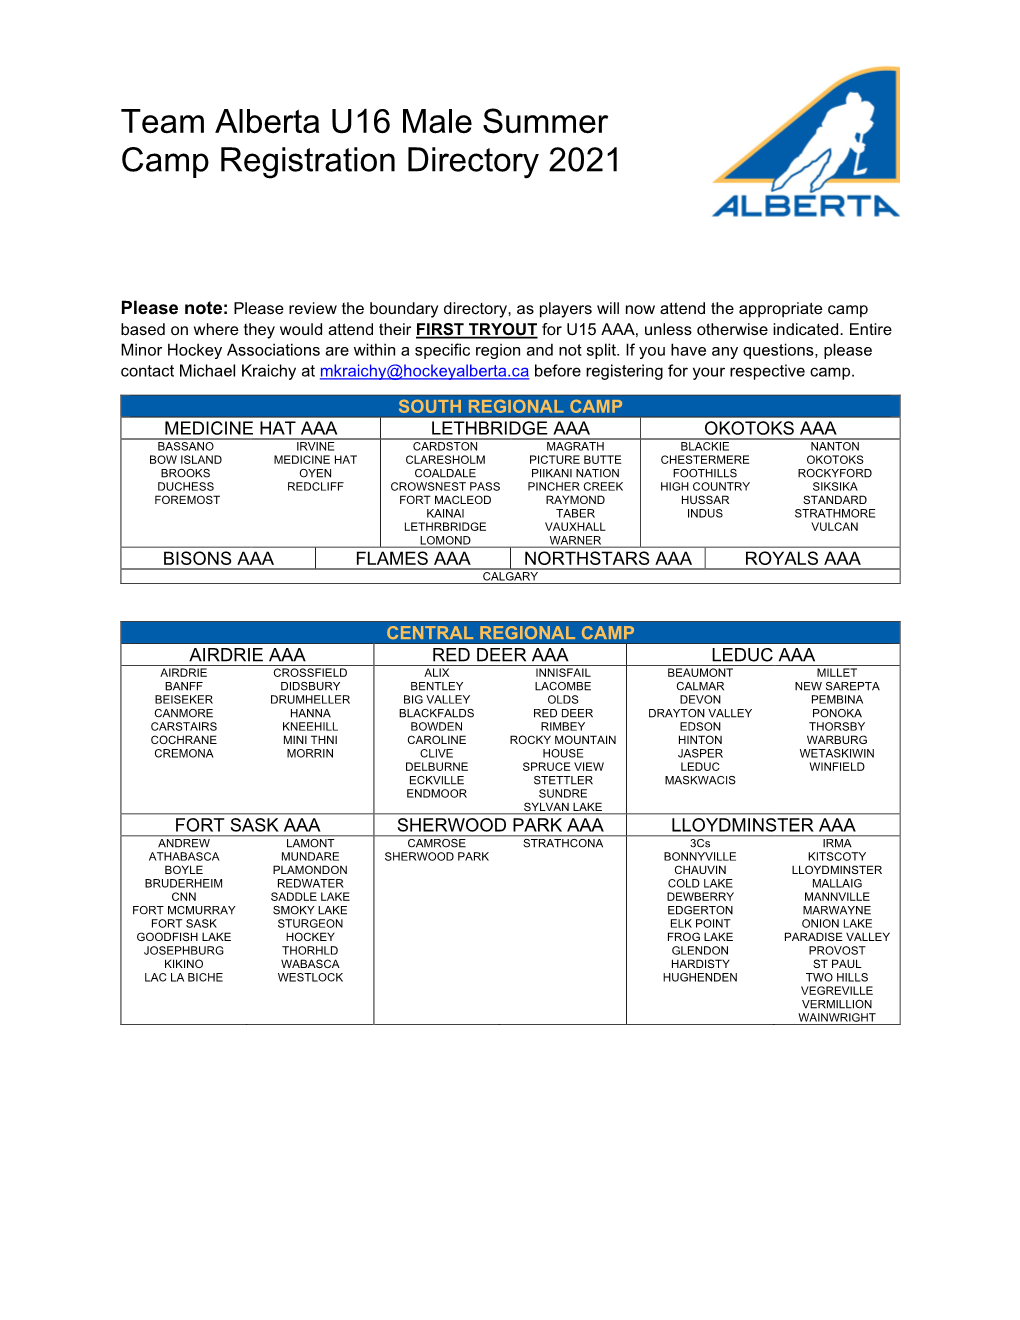 Team Alberta U16 Male Summer Camp Registration Directory 2021